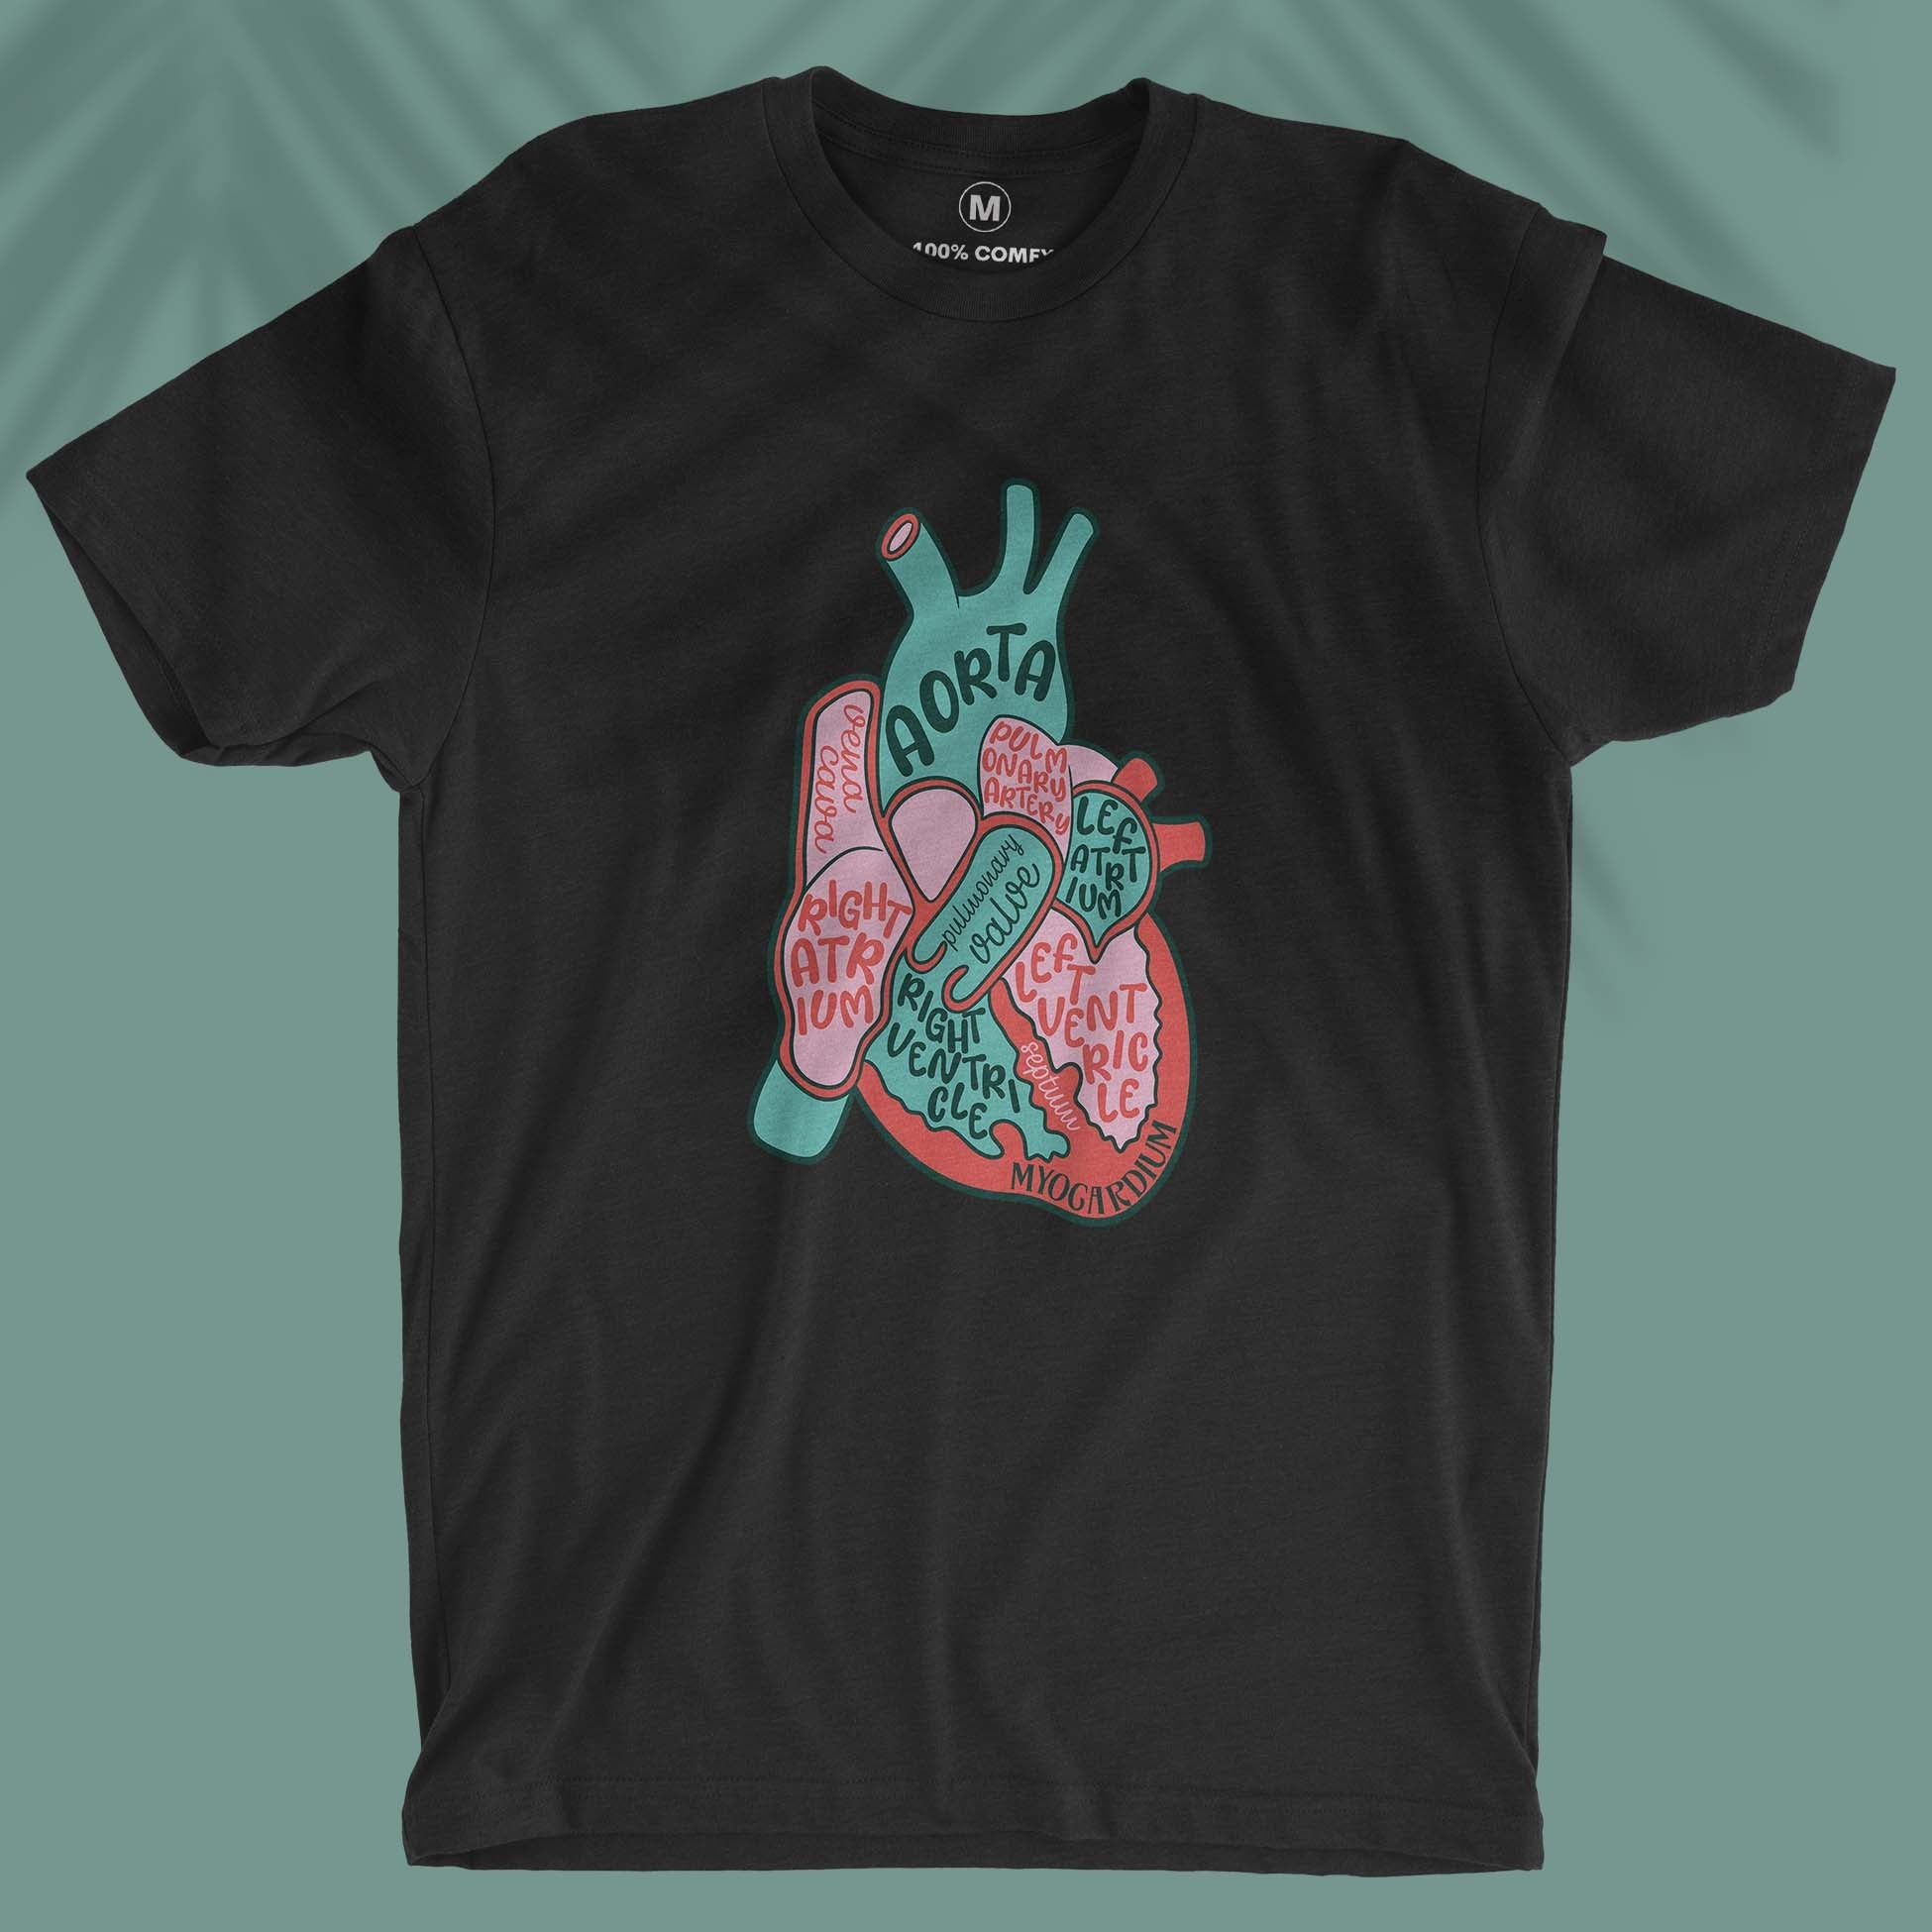 Parts Of Human Heart - Unisex T-shirt